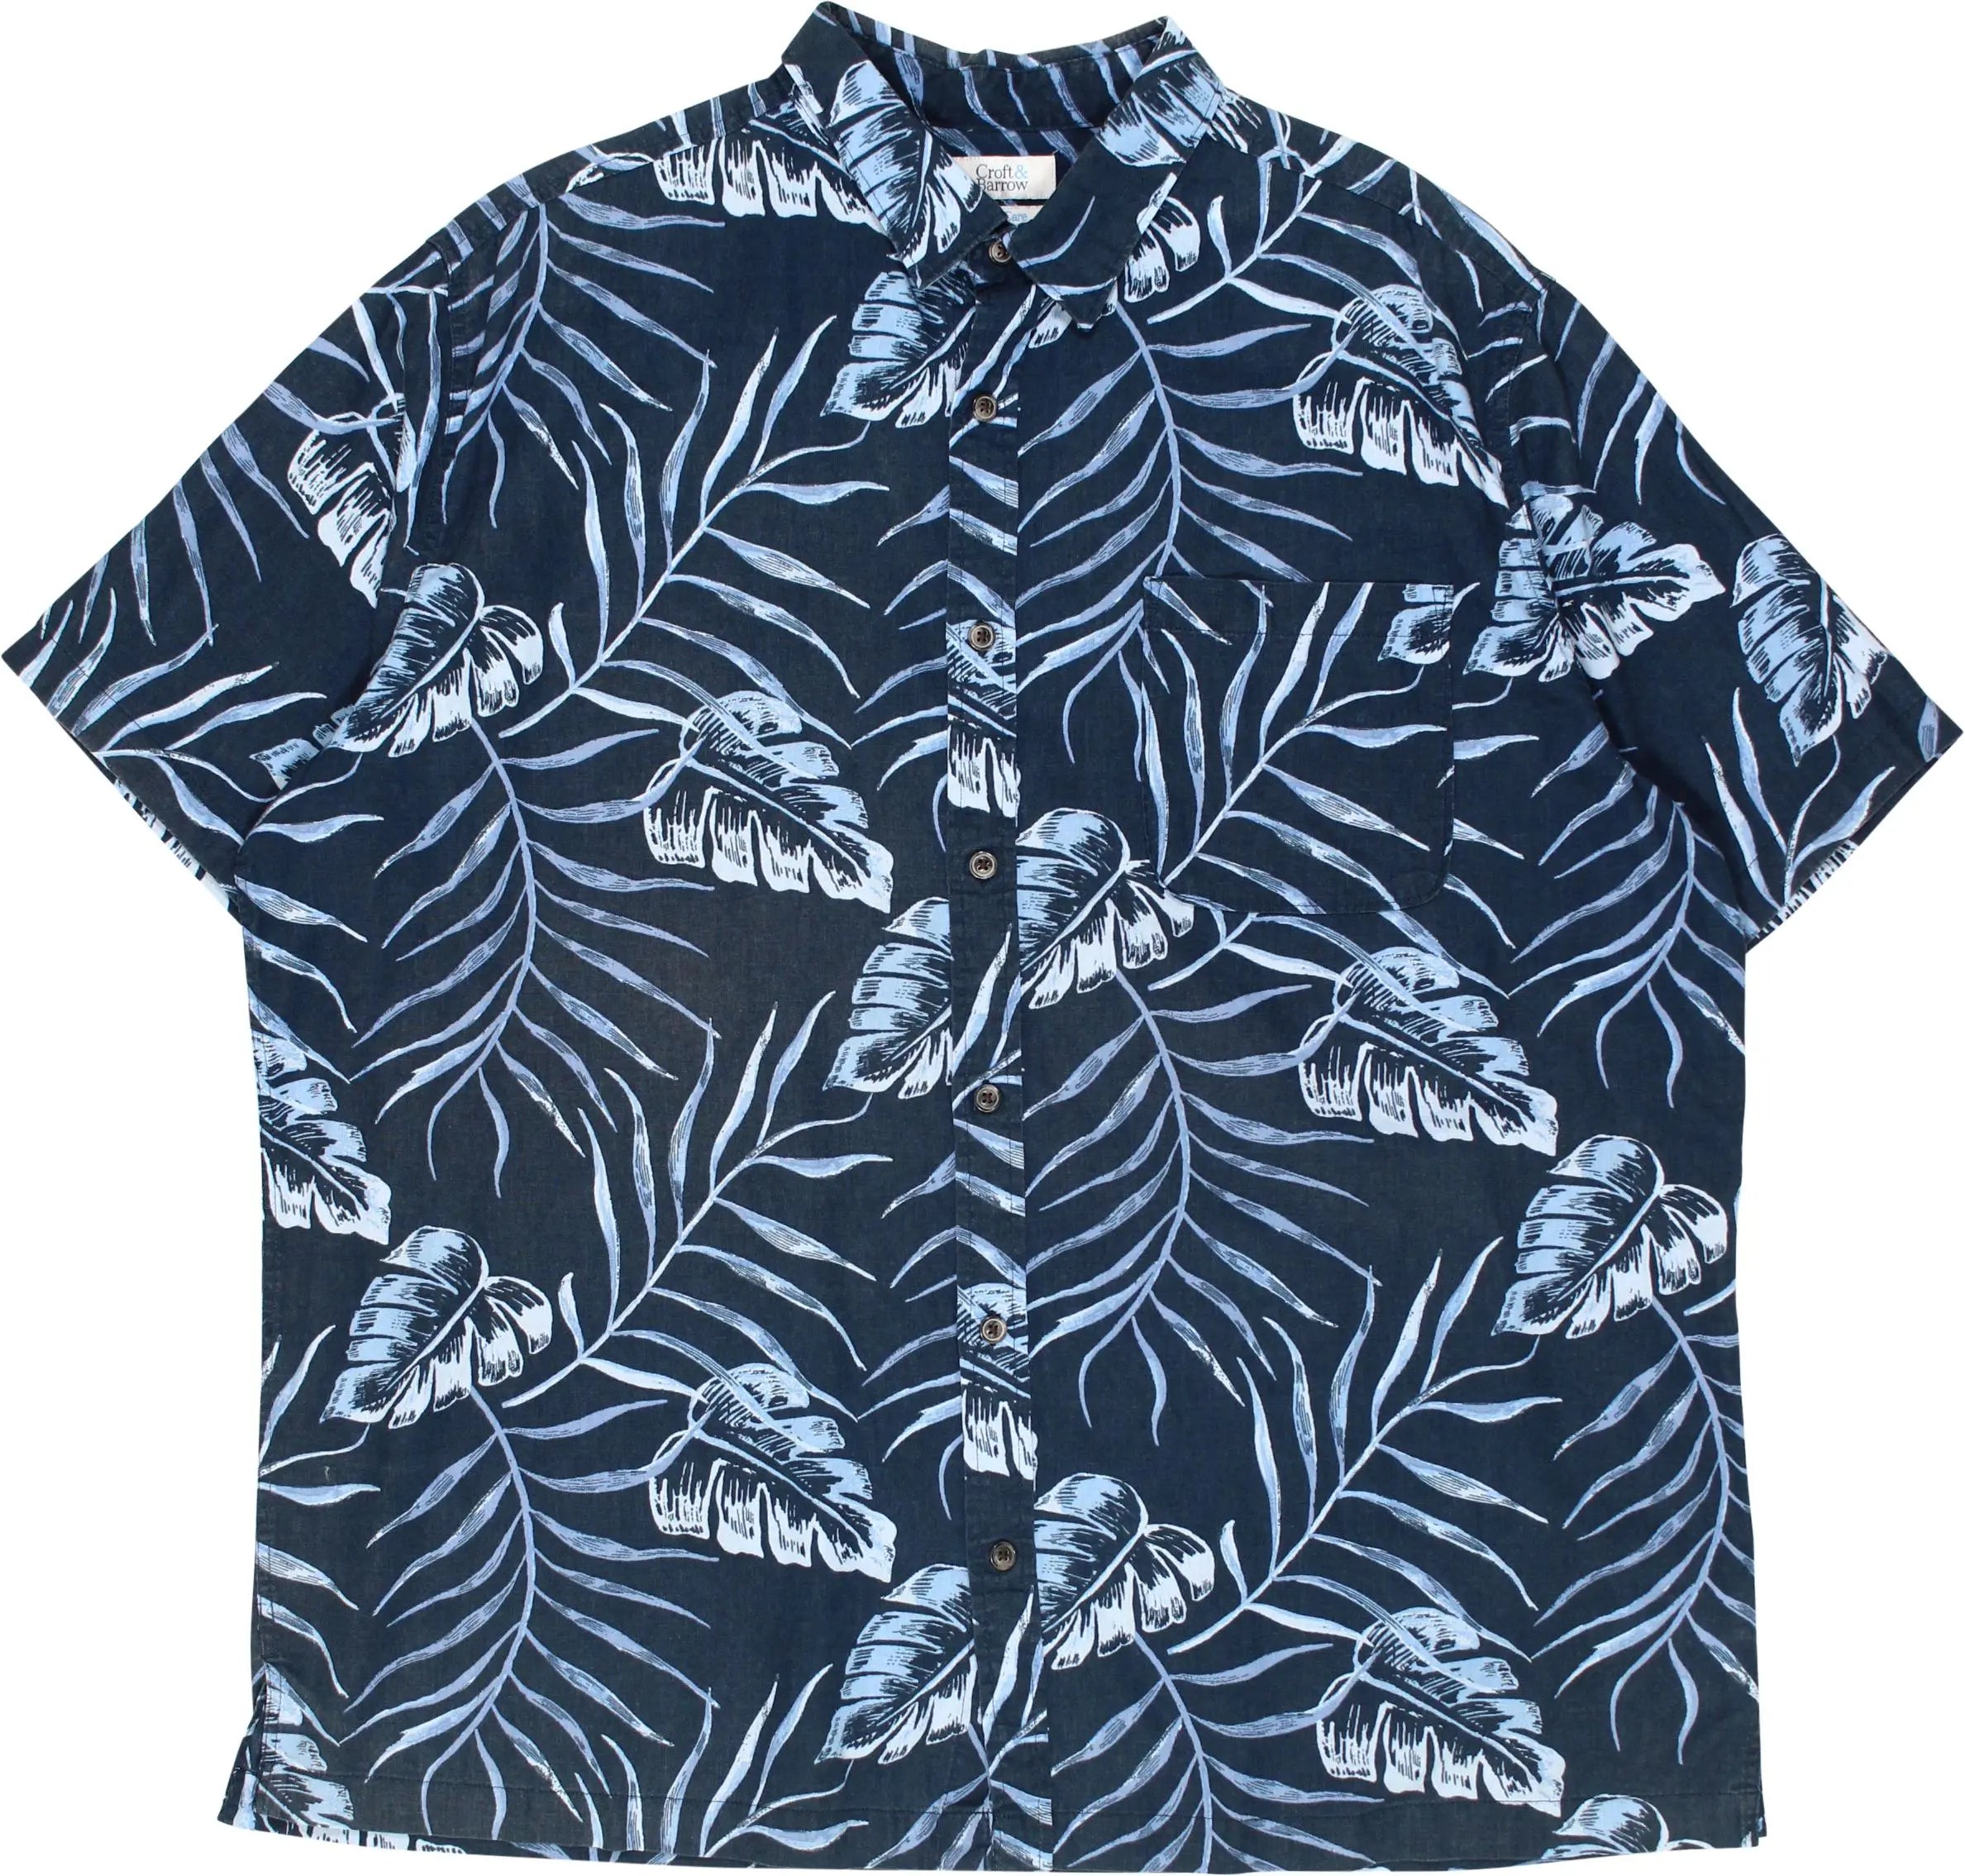 Croft & Barrow - Hawaiian Shirt- ThriftTale.com - Vintage and second handclothing